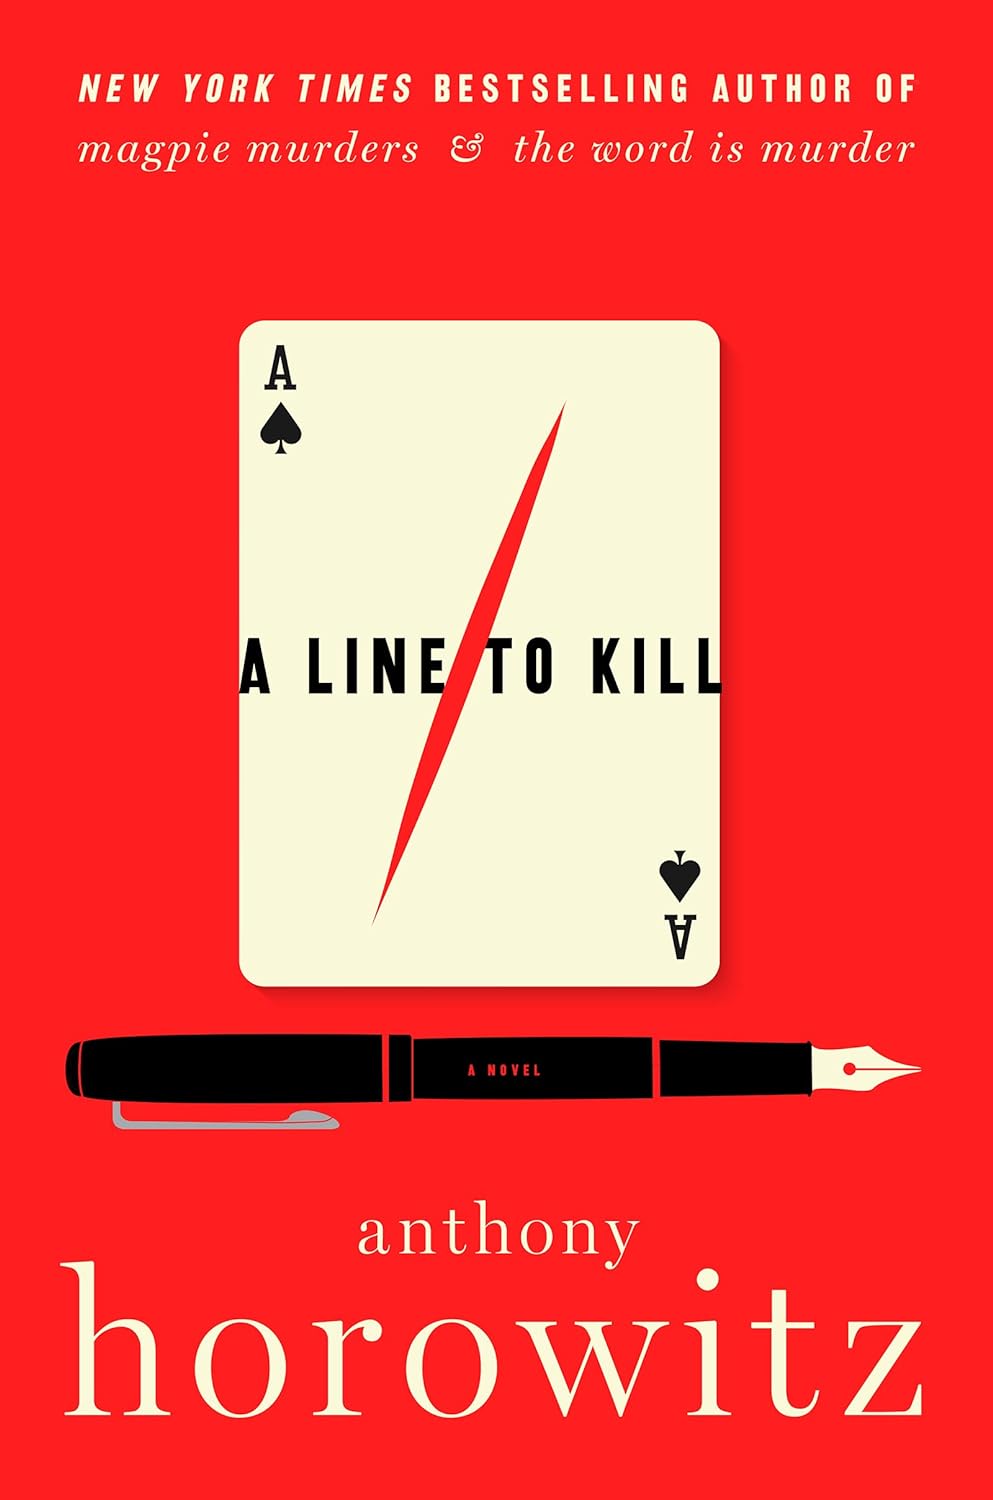 Image for "A Line to Kill: A Novel"